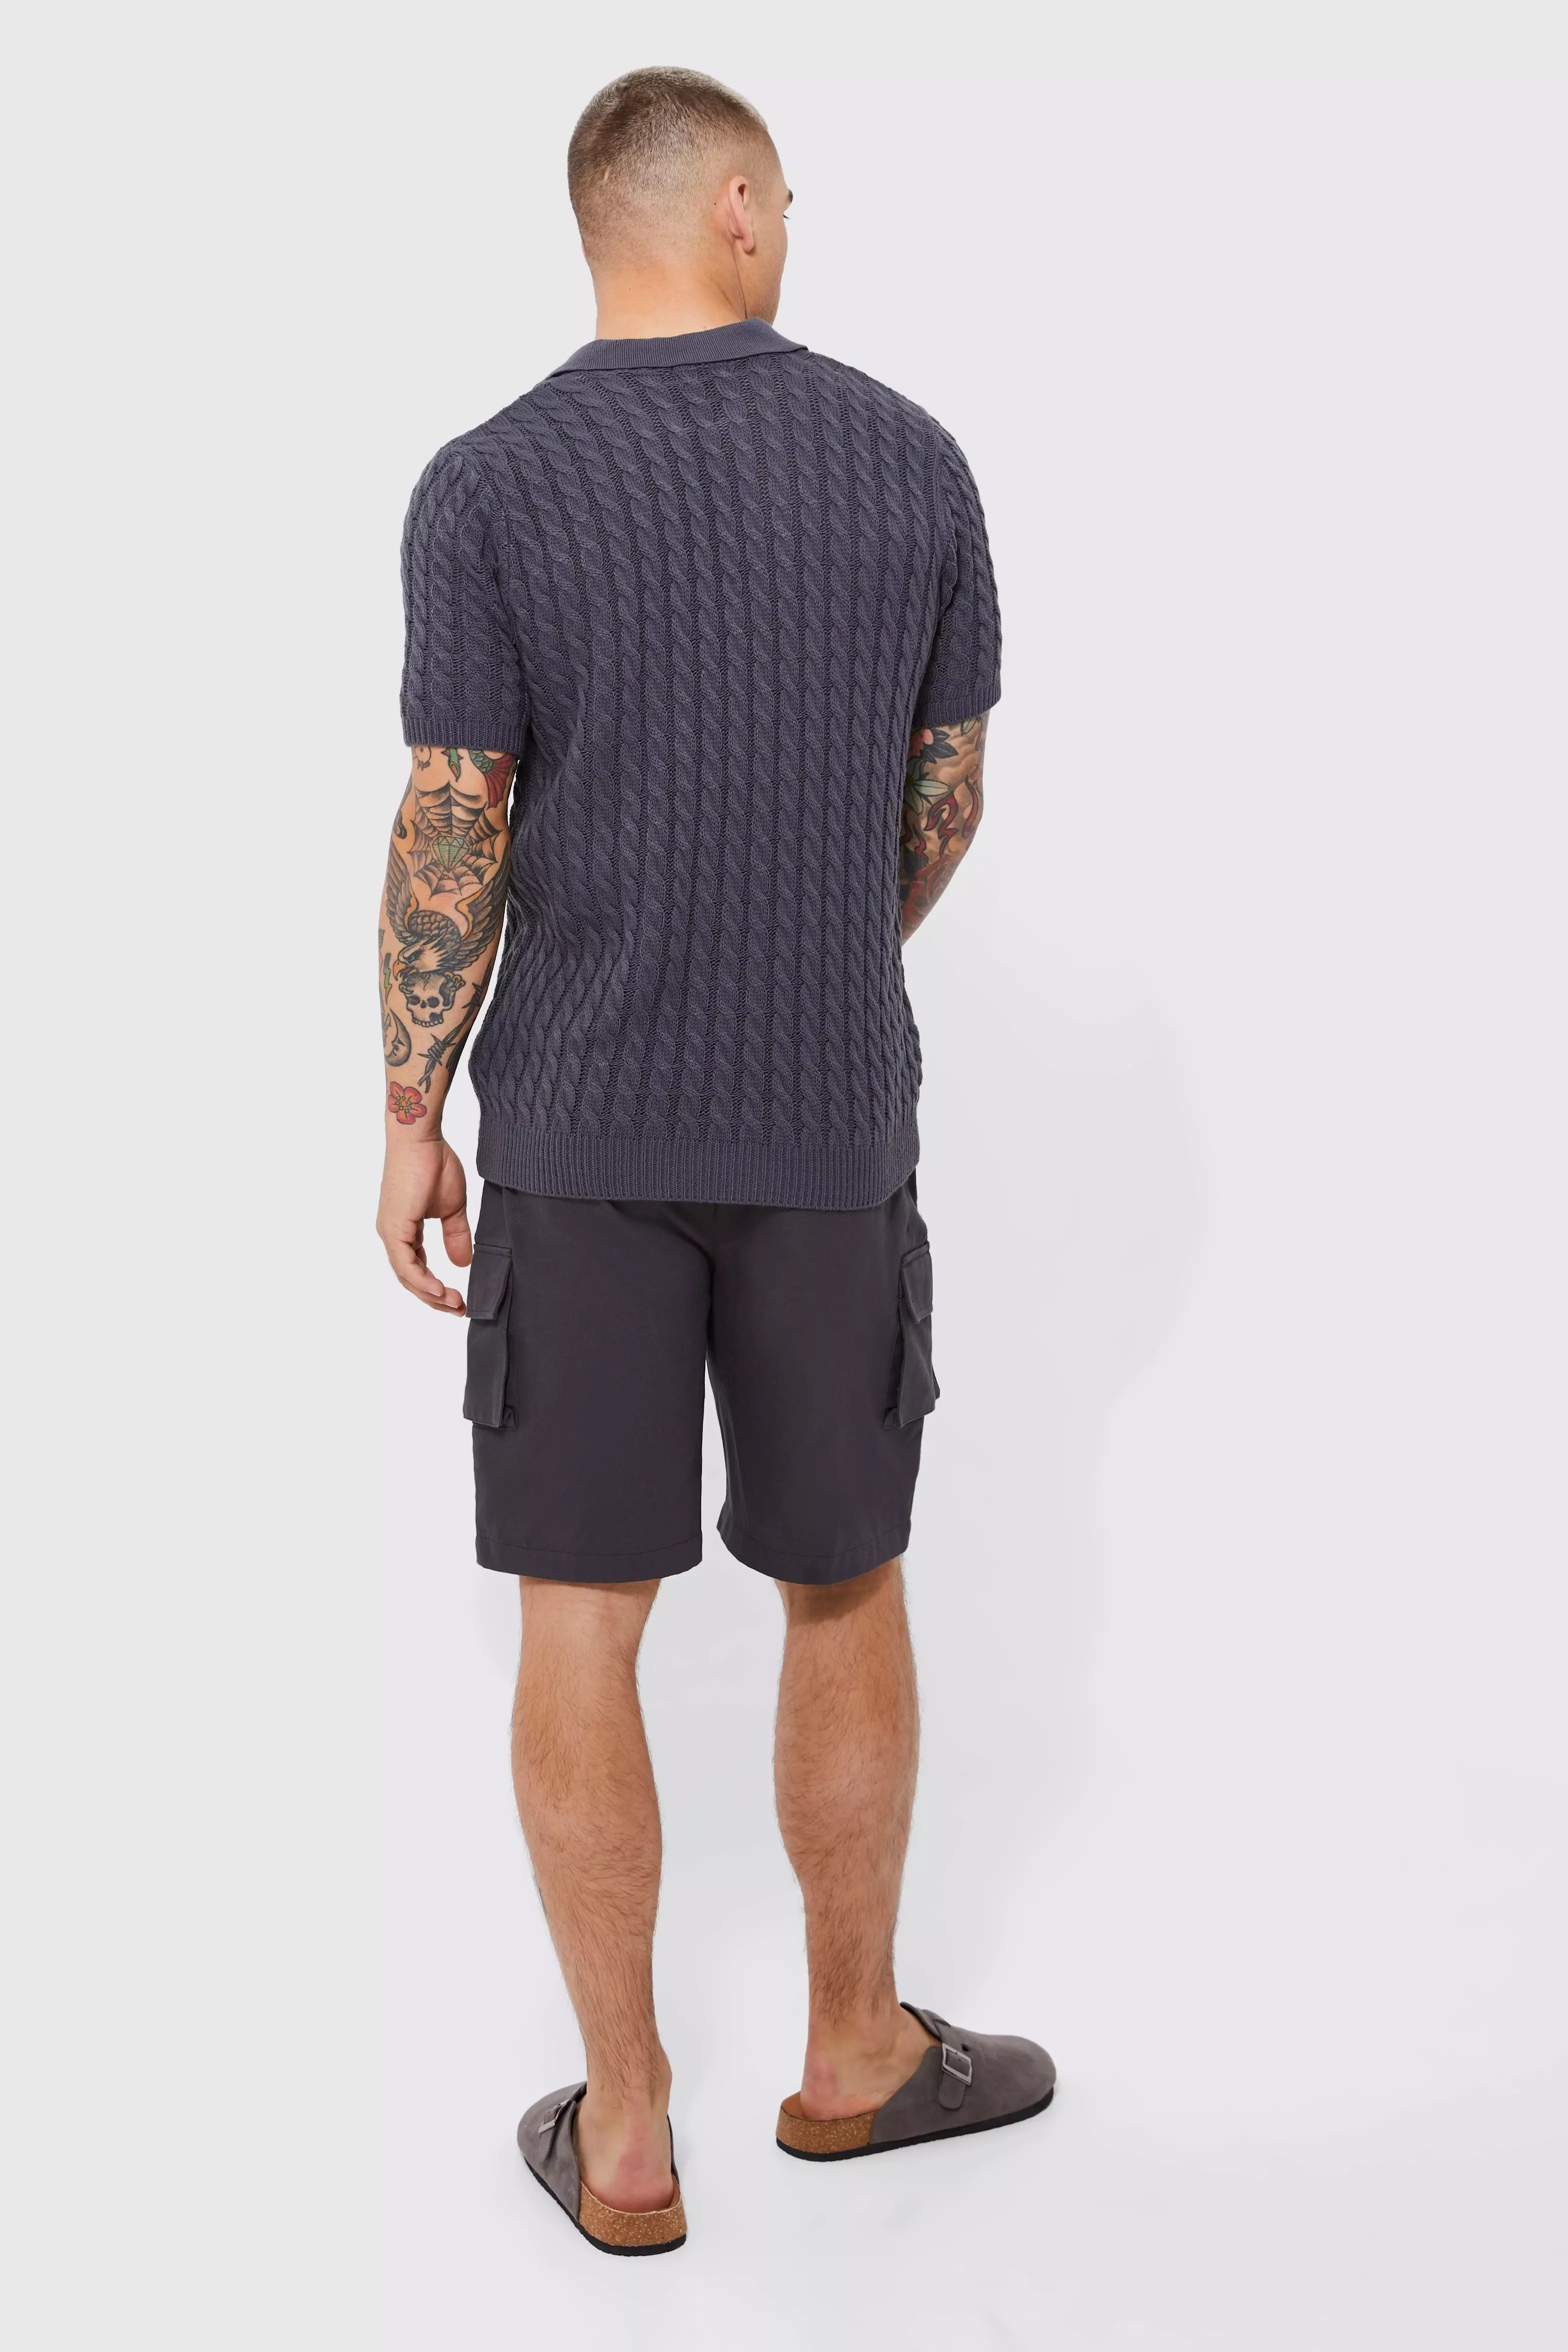  Gnvviwl Mens Waffle Knit Polo Shirts Short Sleeve Slim